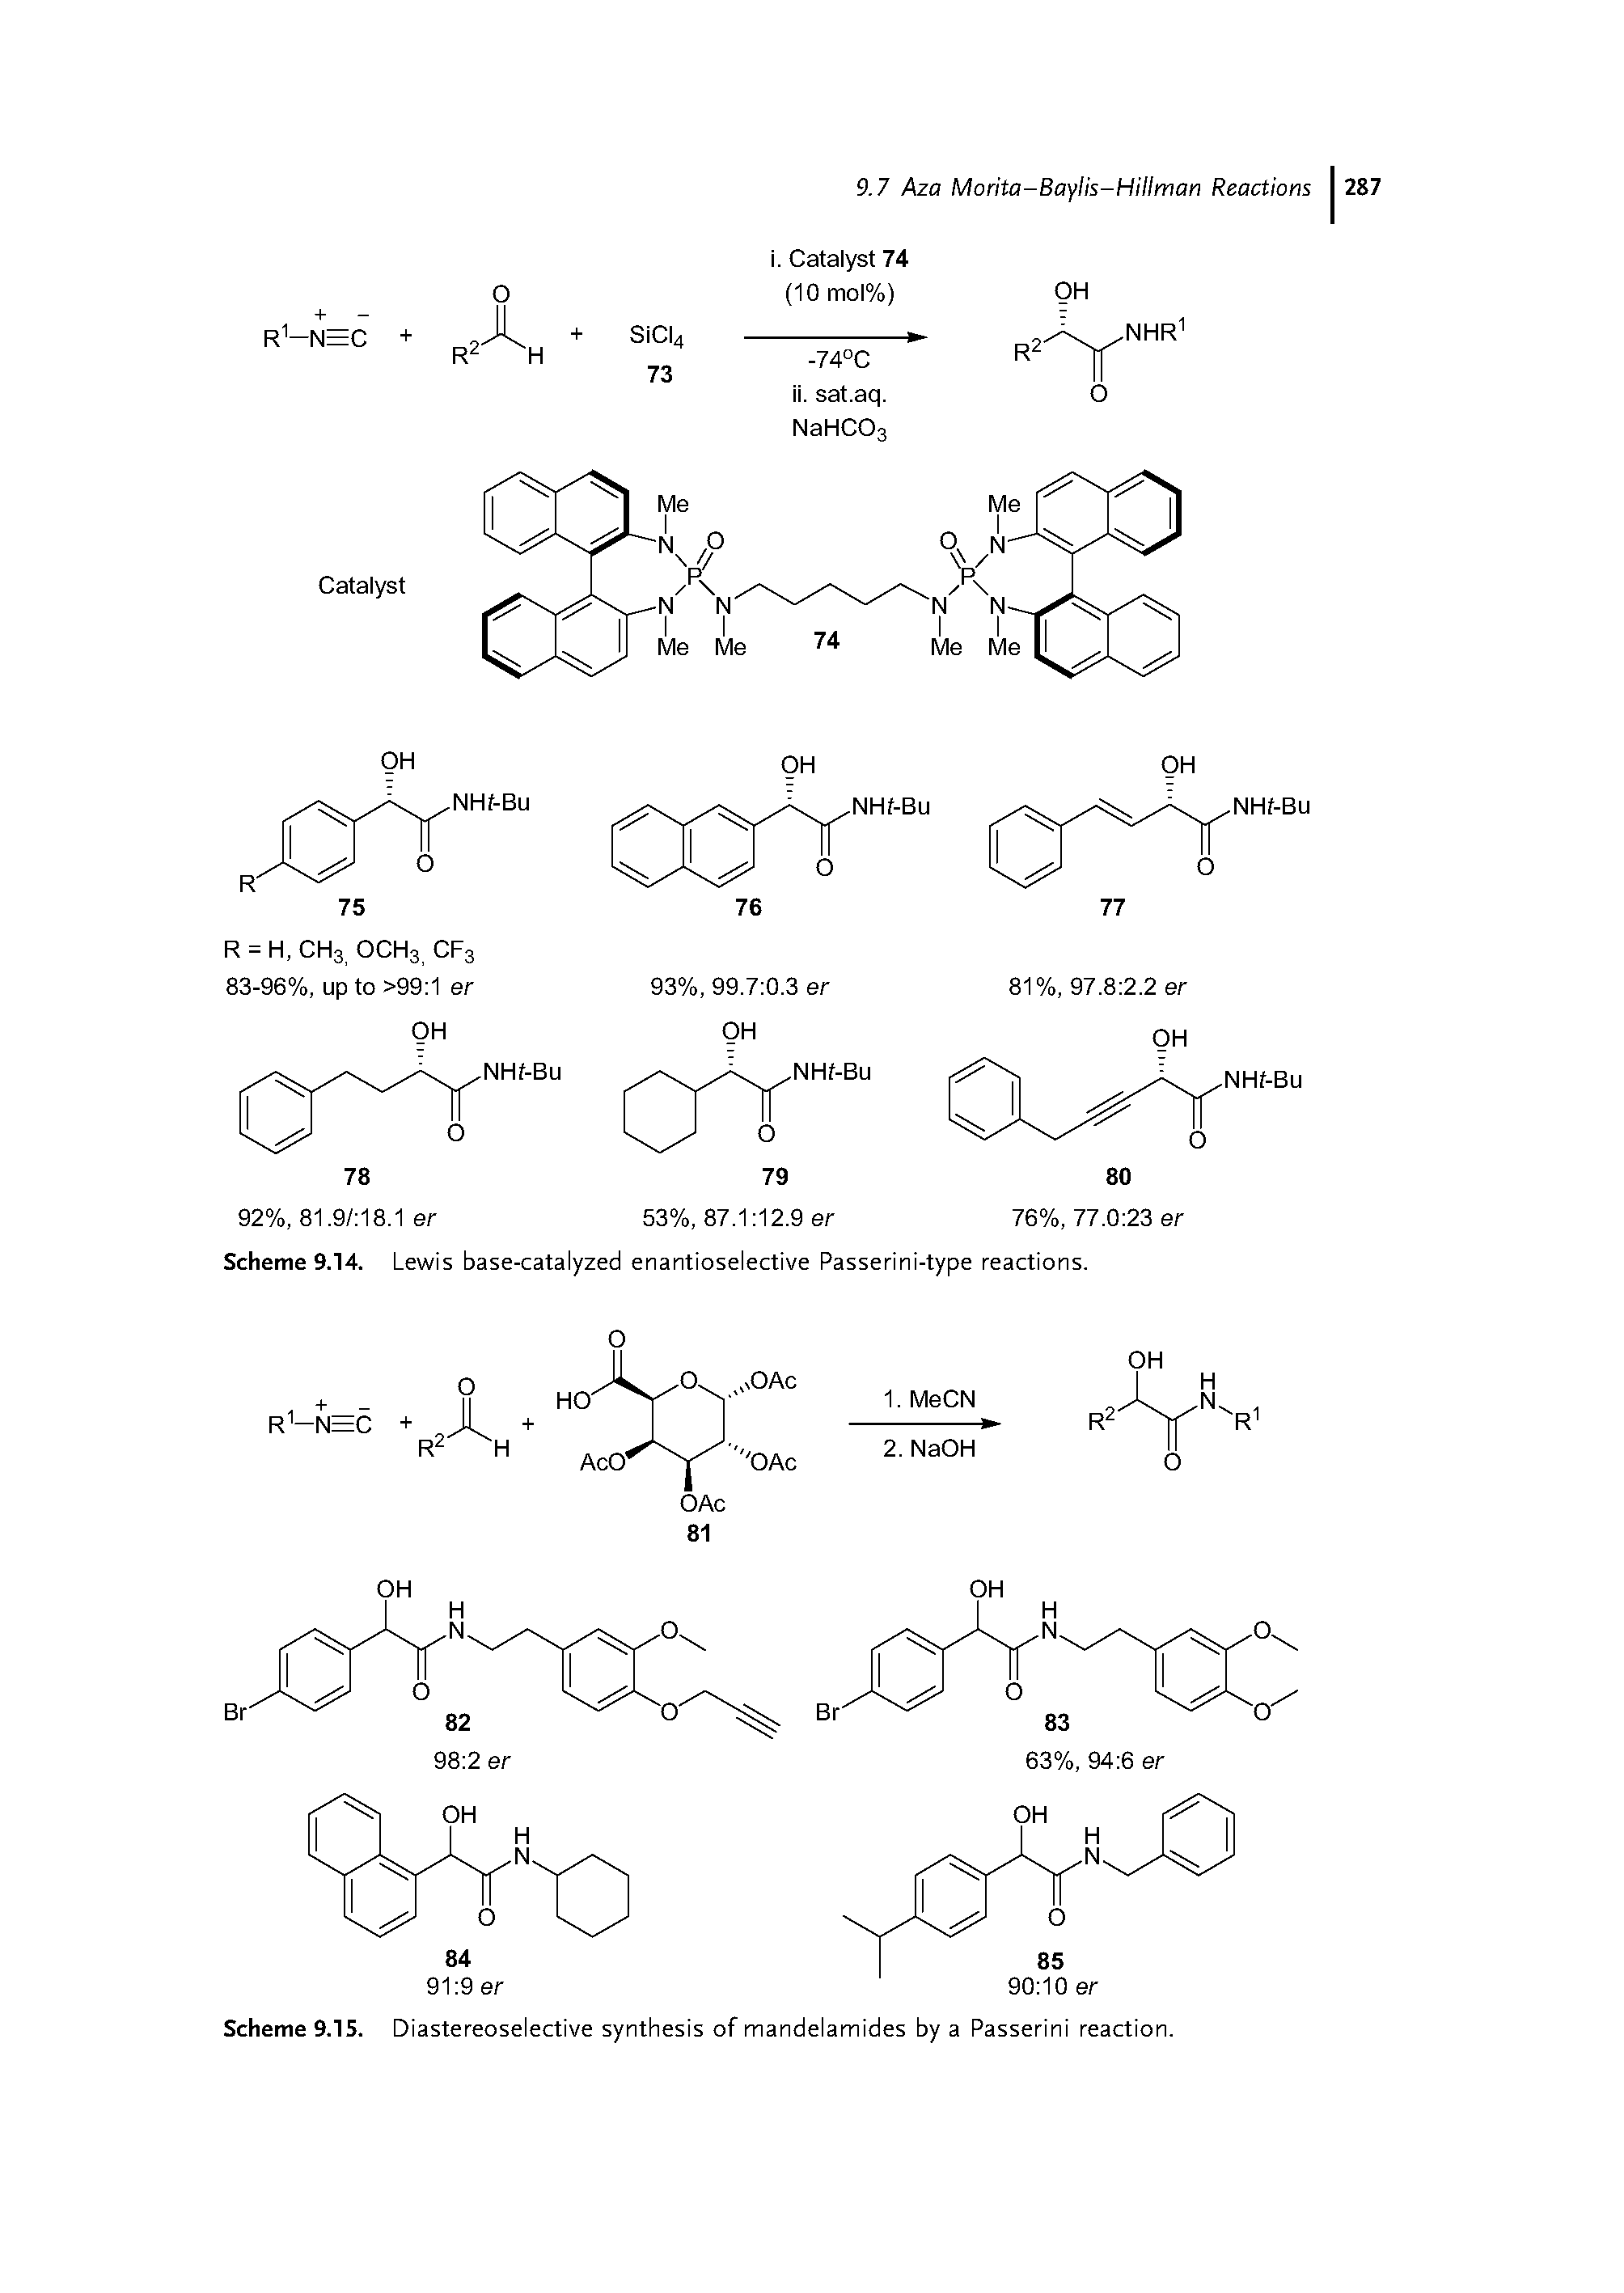 Scheme 9.14. Lewis base-catalyzed enantioselective Passerini-type reactions.